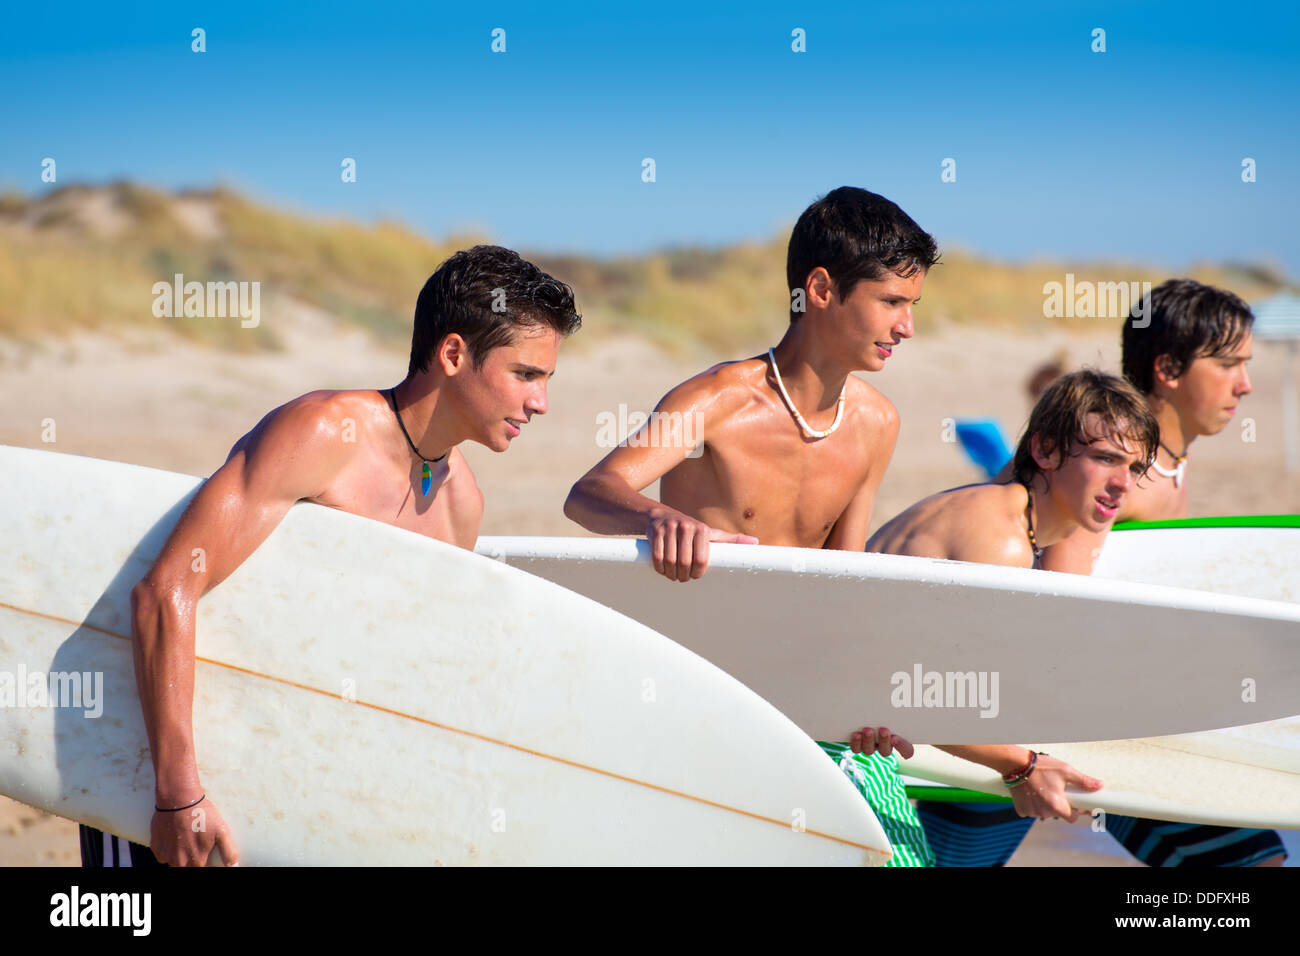 Teen jungen Surfer am Strand Ufer halten Surfbretter sprechen Stockfoto